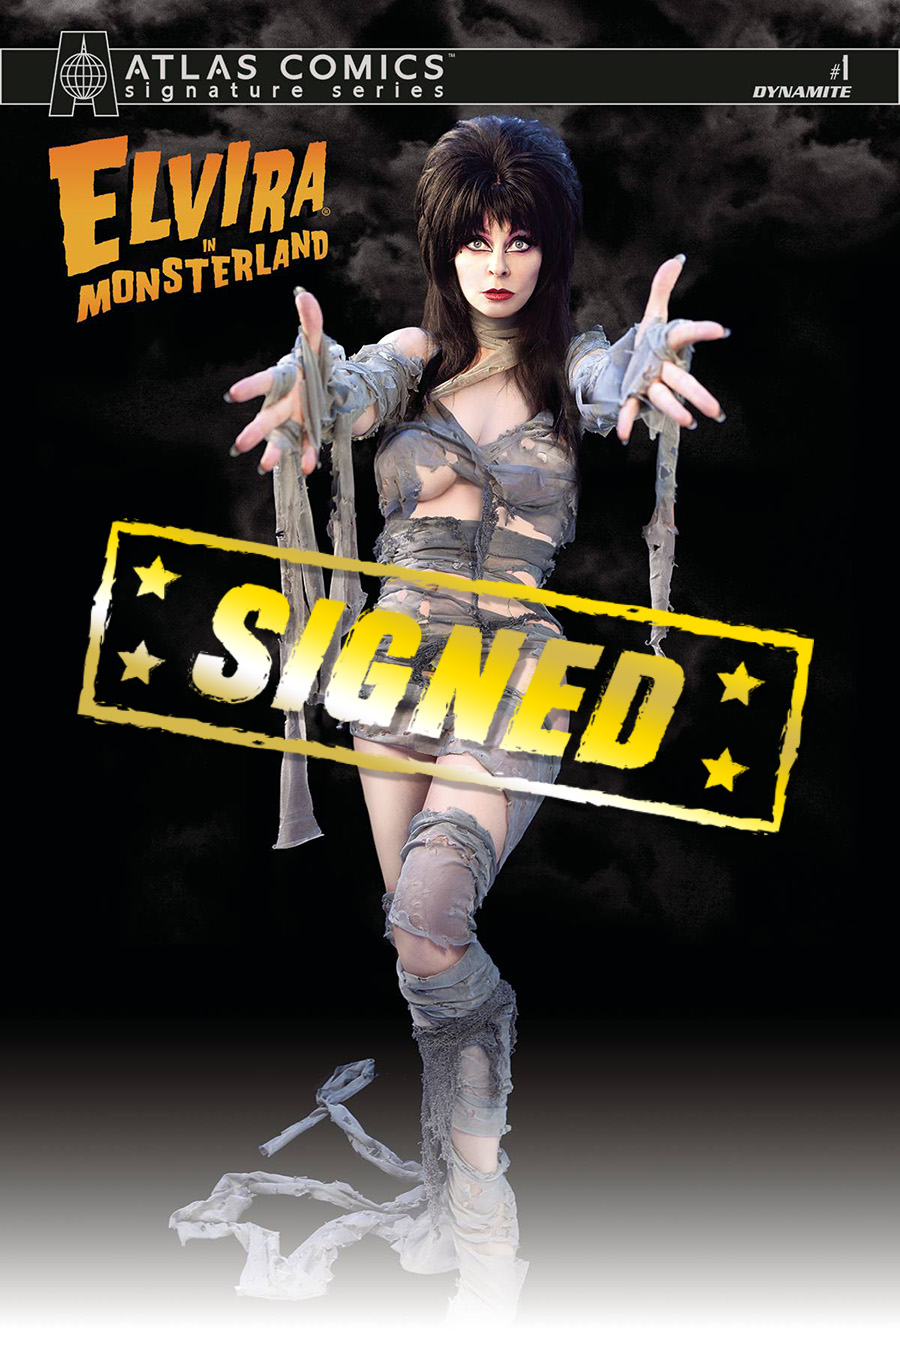 Elvira In Monsterland #1 Cover M Atlas Comics Signature Series Photo Cover Signed By Elvira